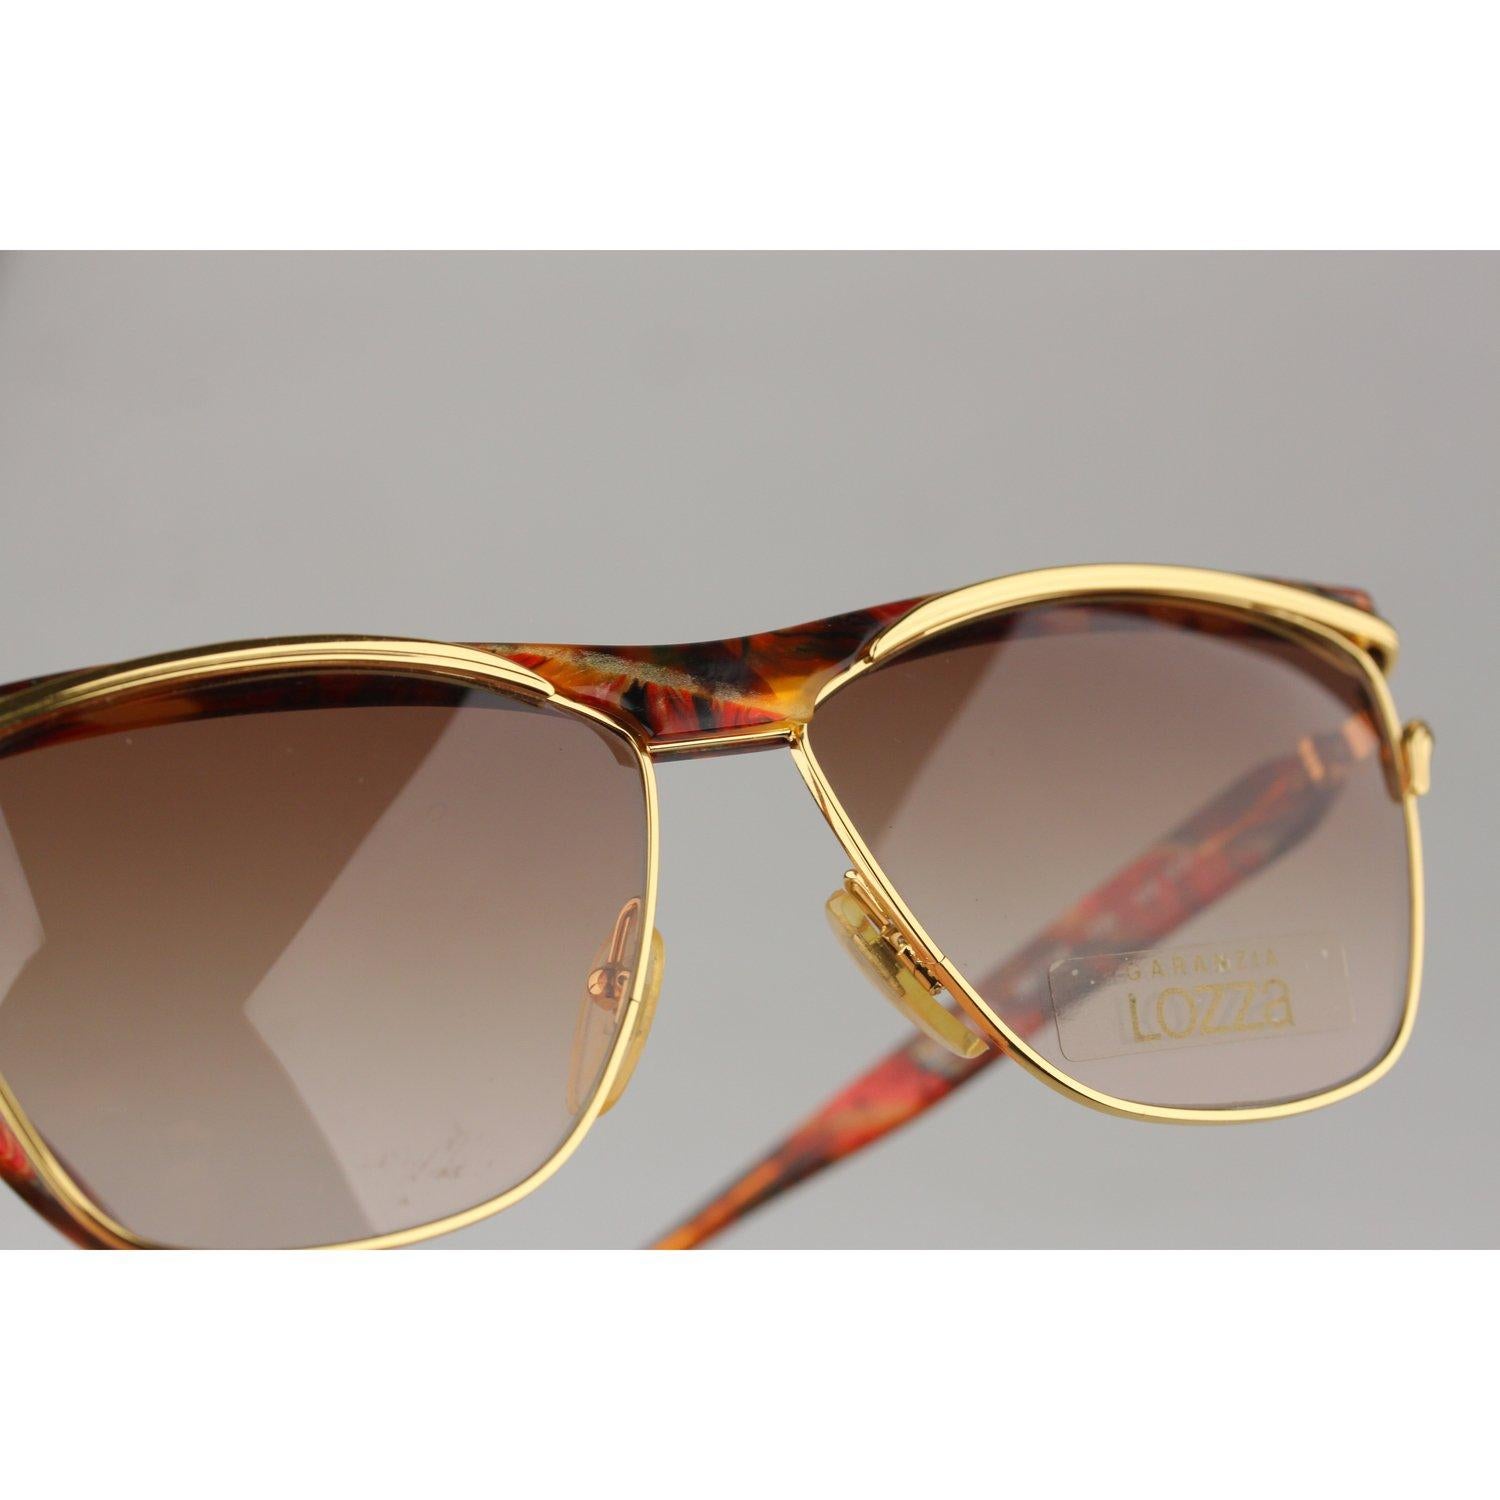 Lozza VIntage Unisex Brown and Gold Sunglasses Mod. Letizia 135mm Wide 2